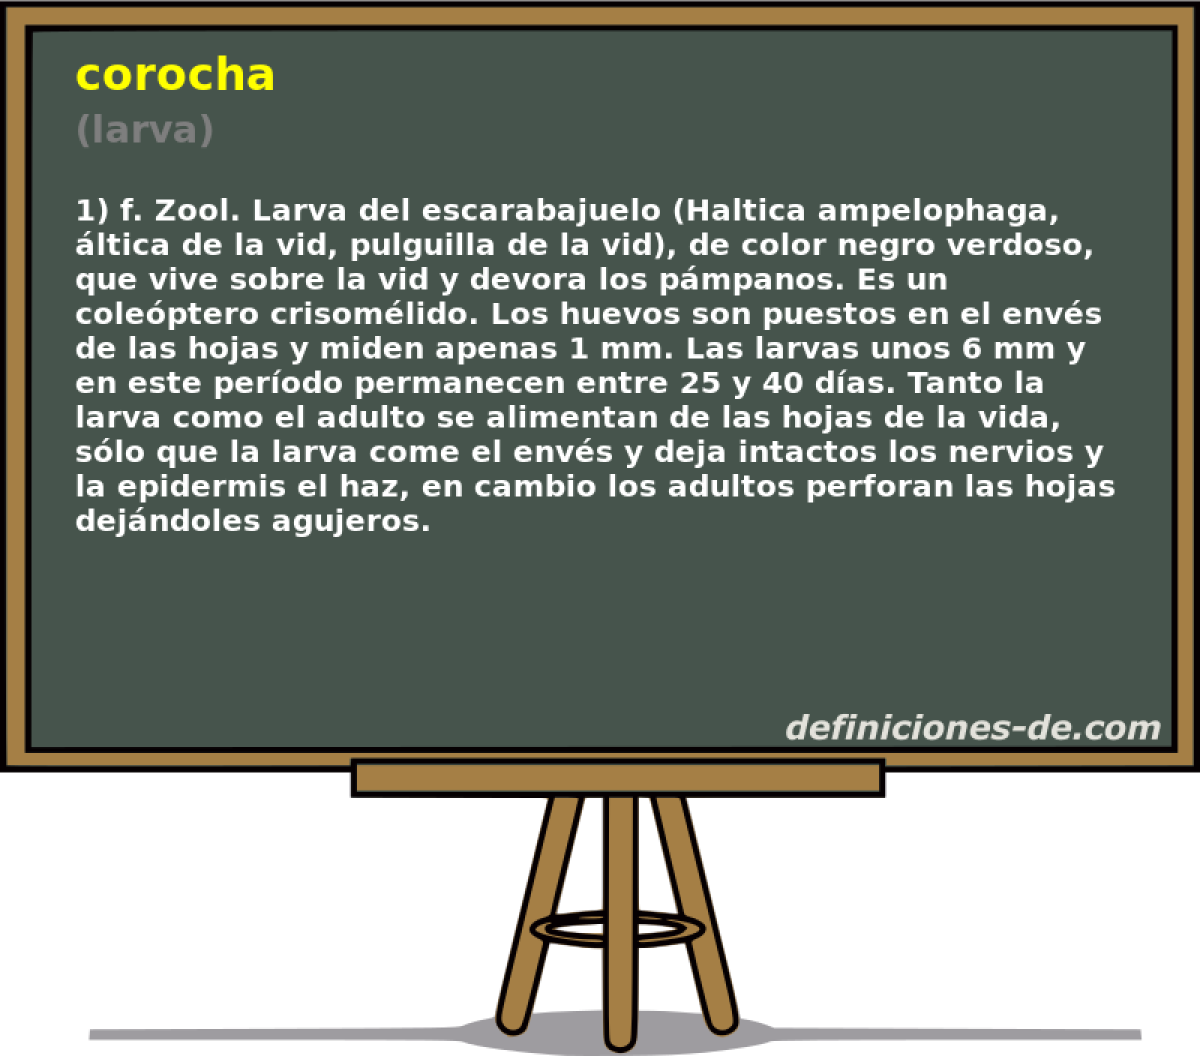 corocha (larva)